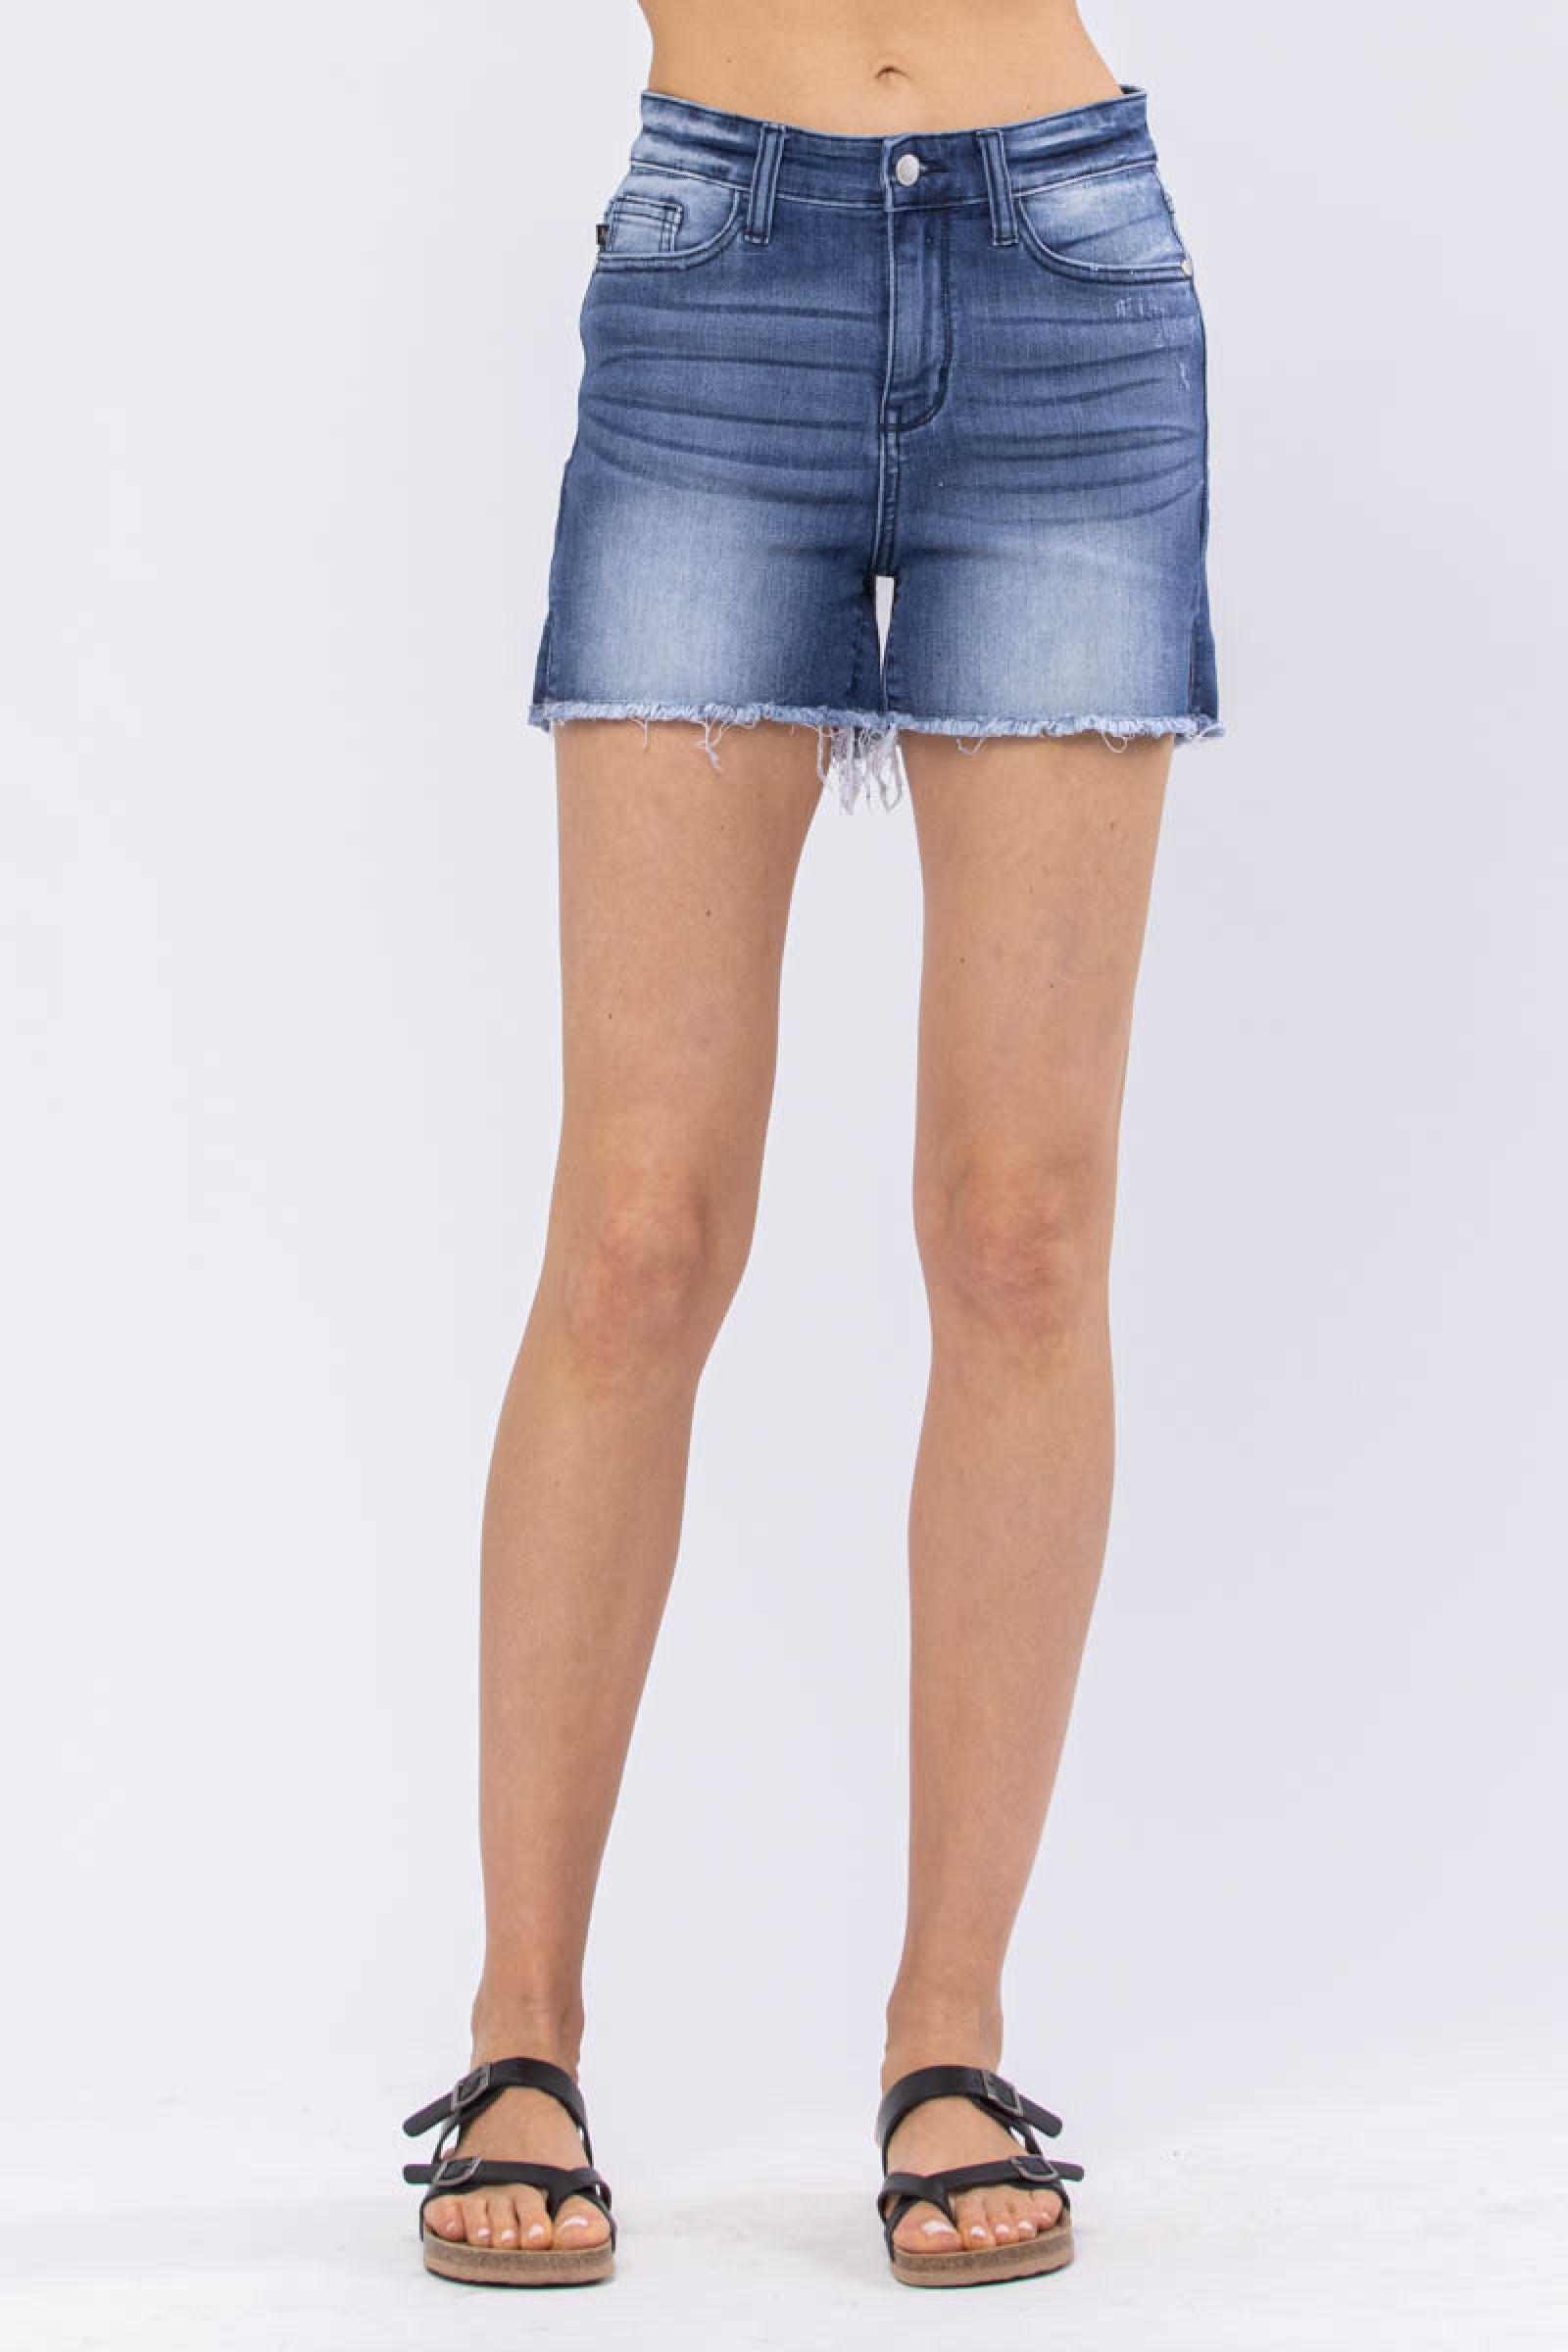 Judy Blue Side Slit Cut Off Shorts - Style 15228